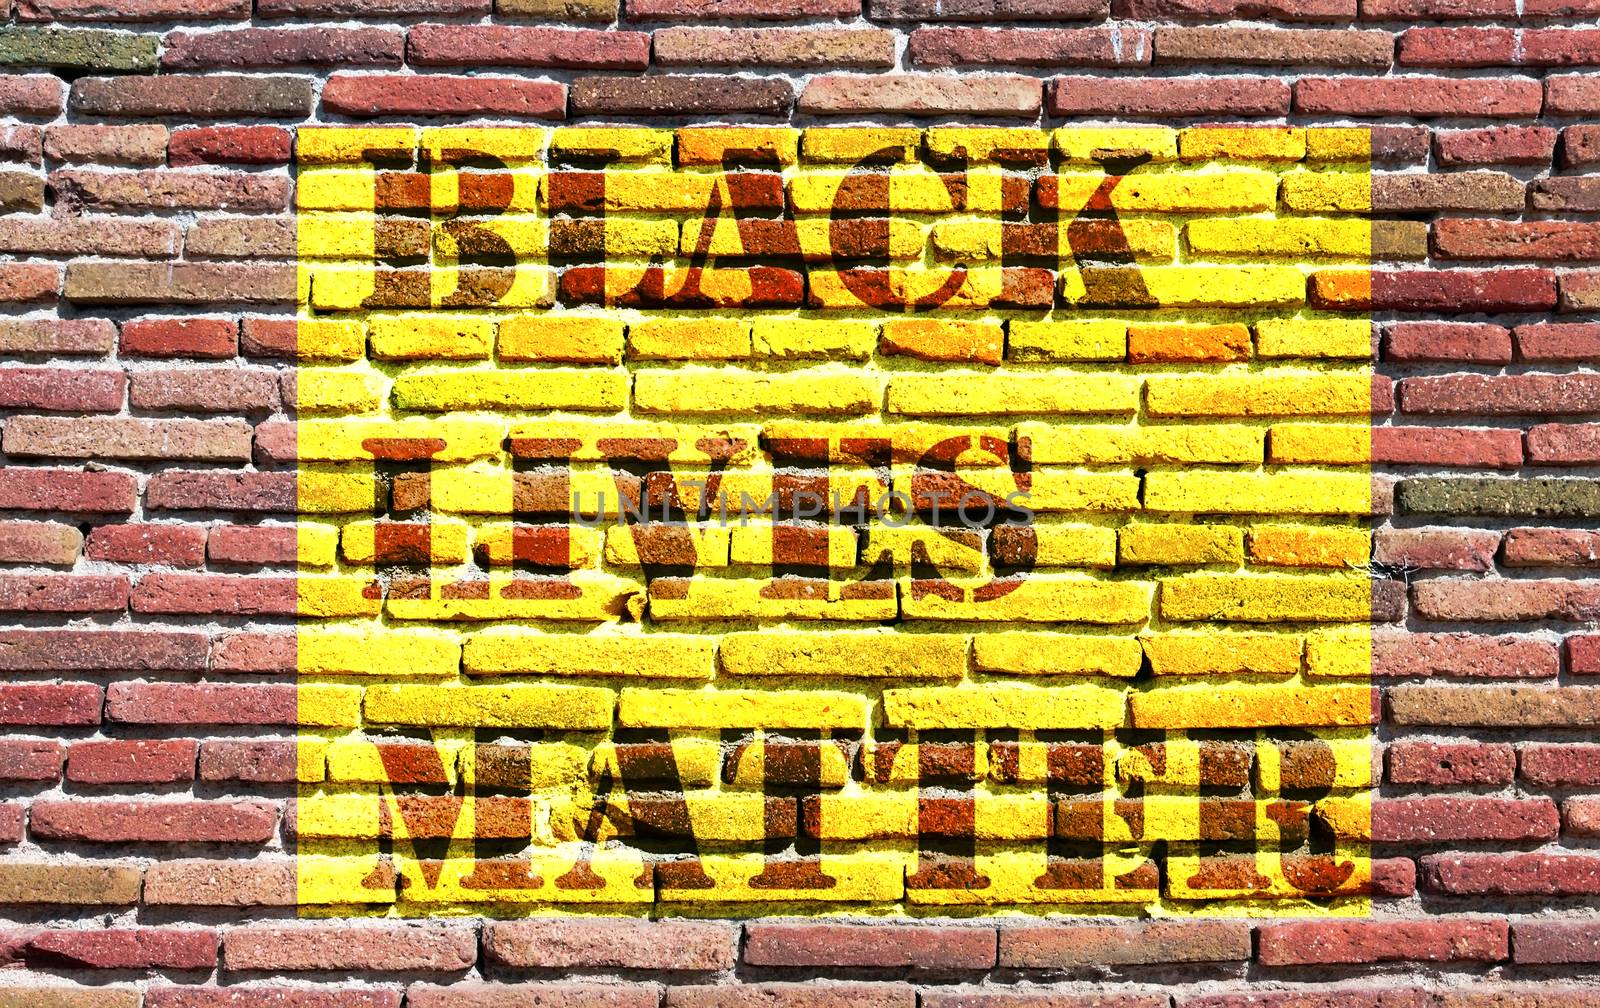 Black Lives Matter slogan liberation banner designs yellow stencil wall from old red brick pattern brickwork